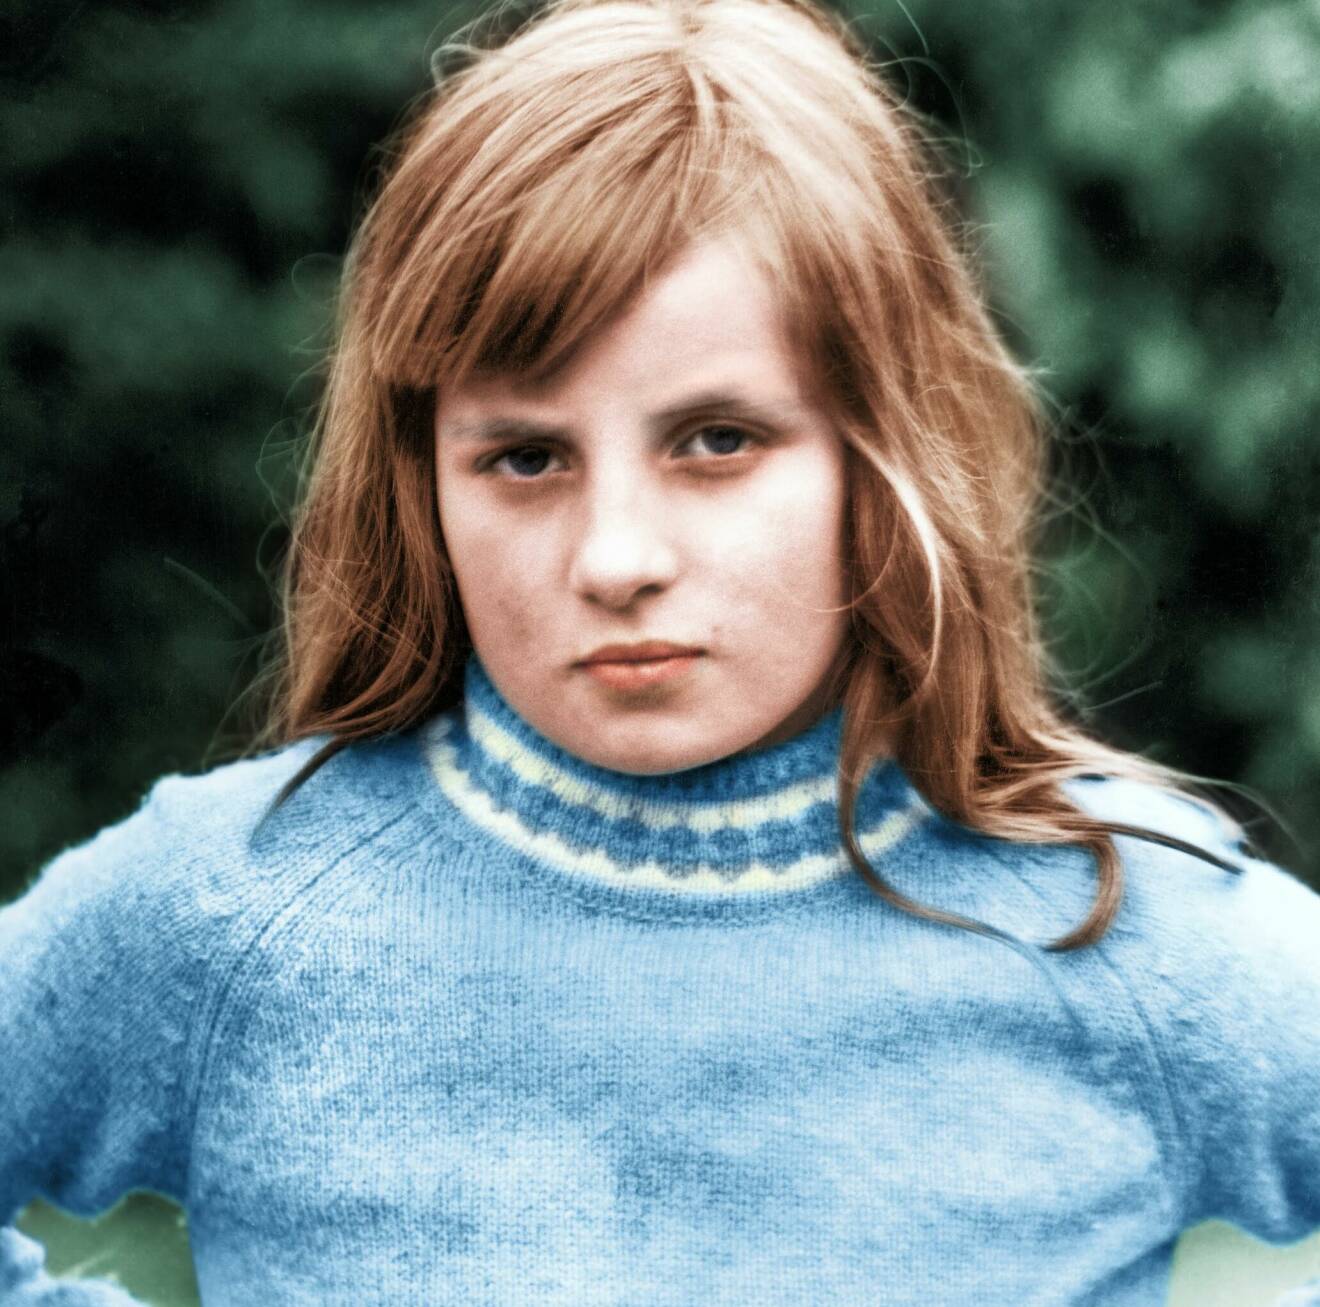 Prinsessan Diana som barn, då hon hette Lady Diana Spencer